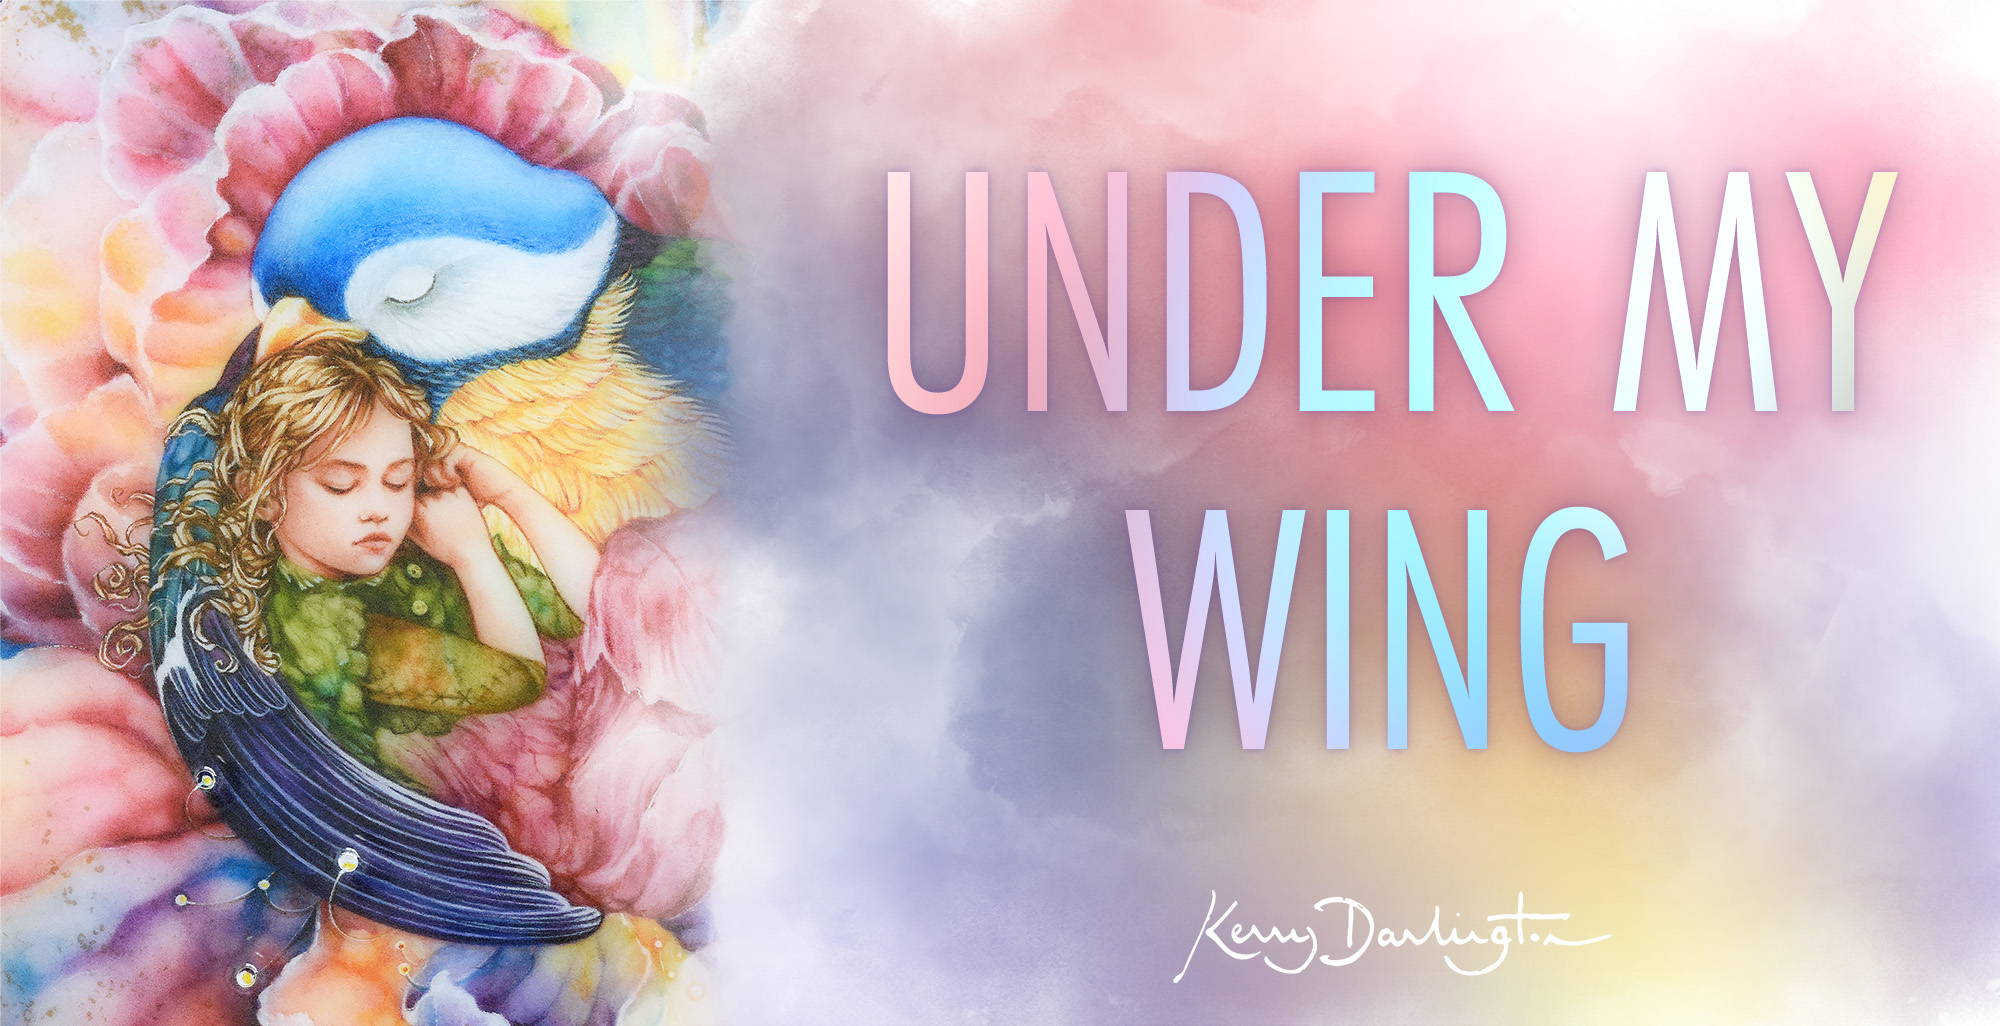 'Under My Wing' Kerry Darlington's Newest Artwork